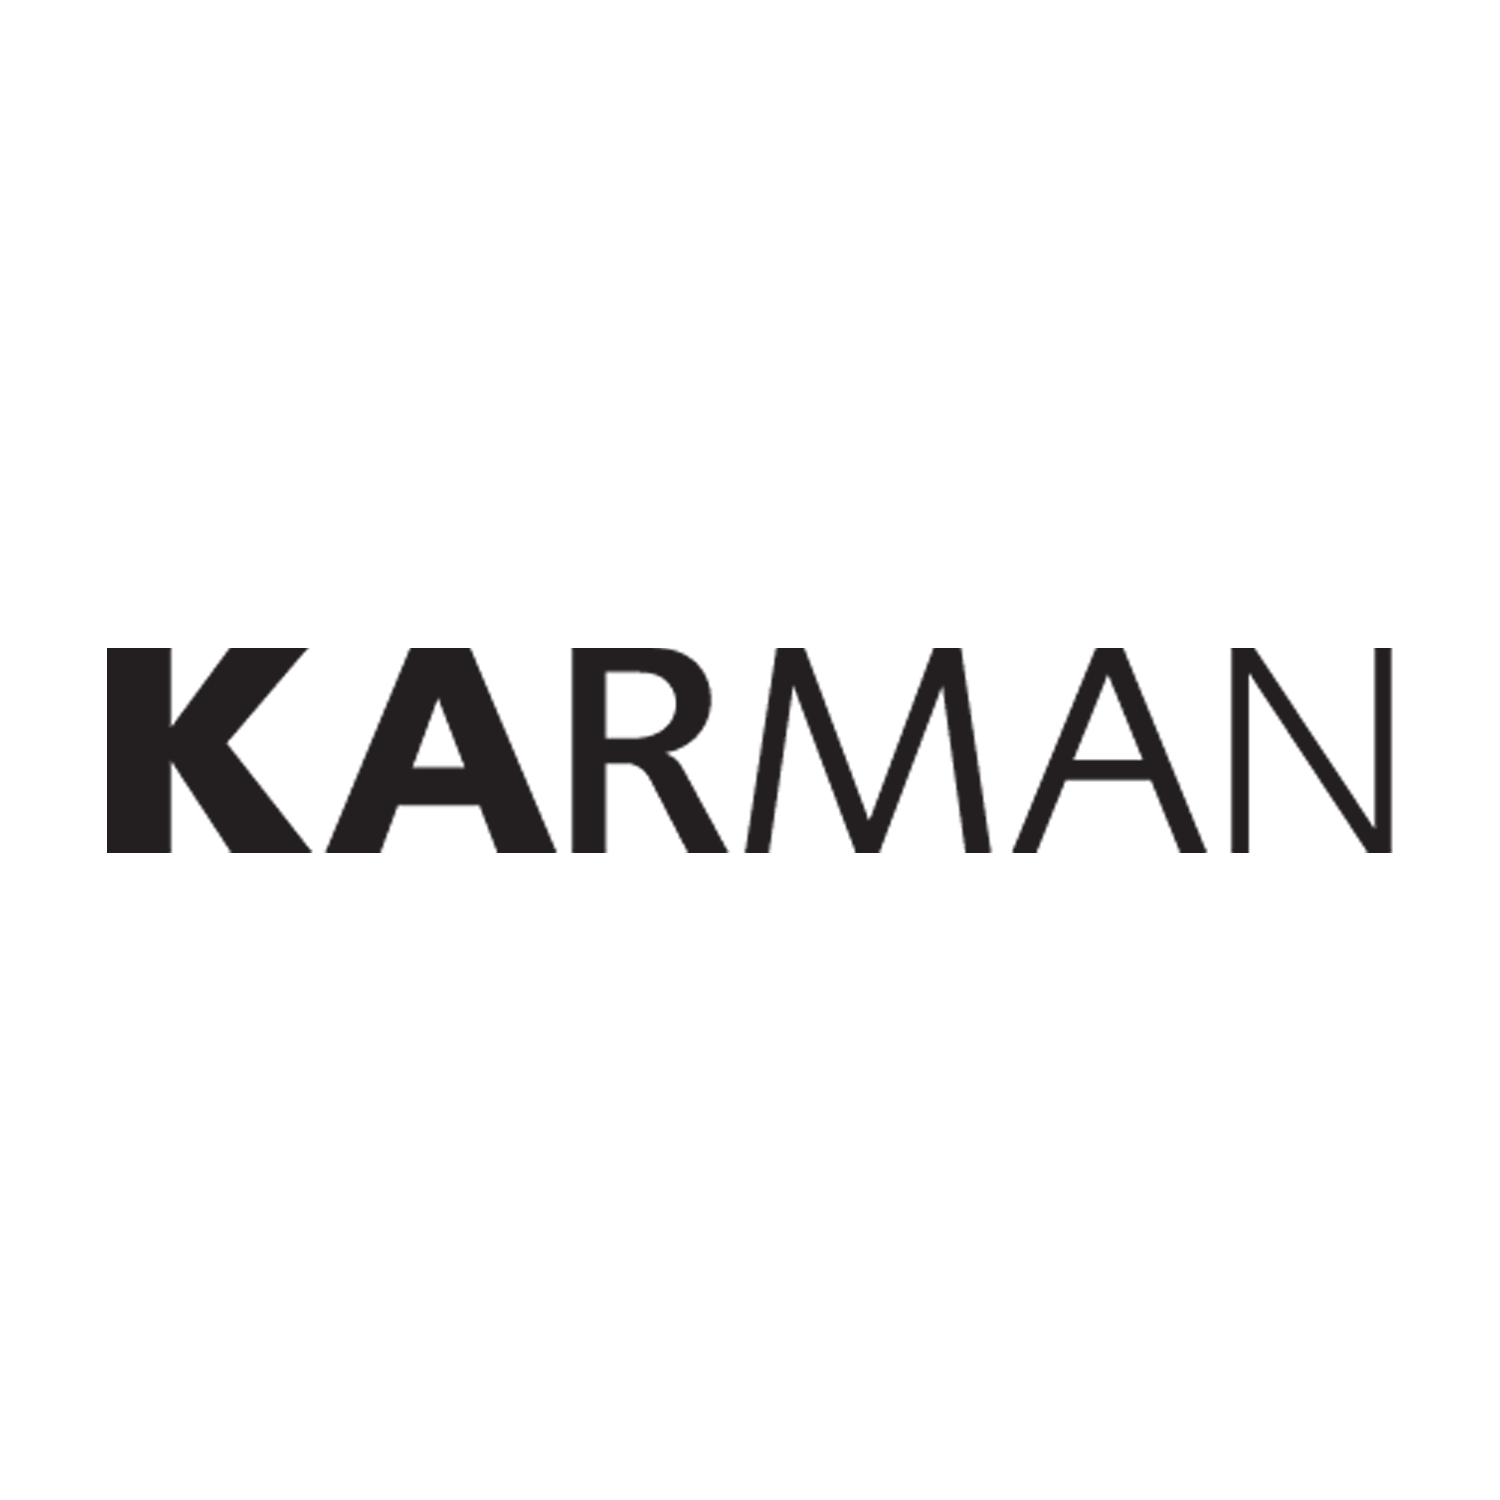 karman-logo